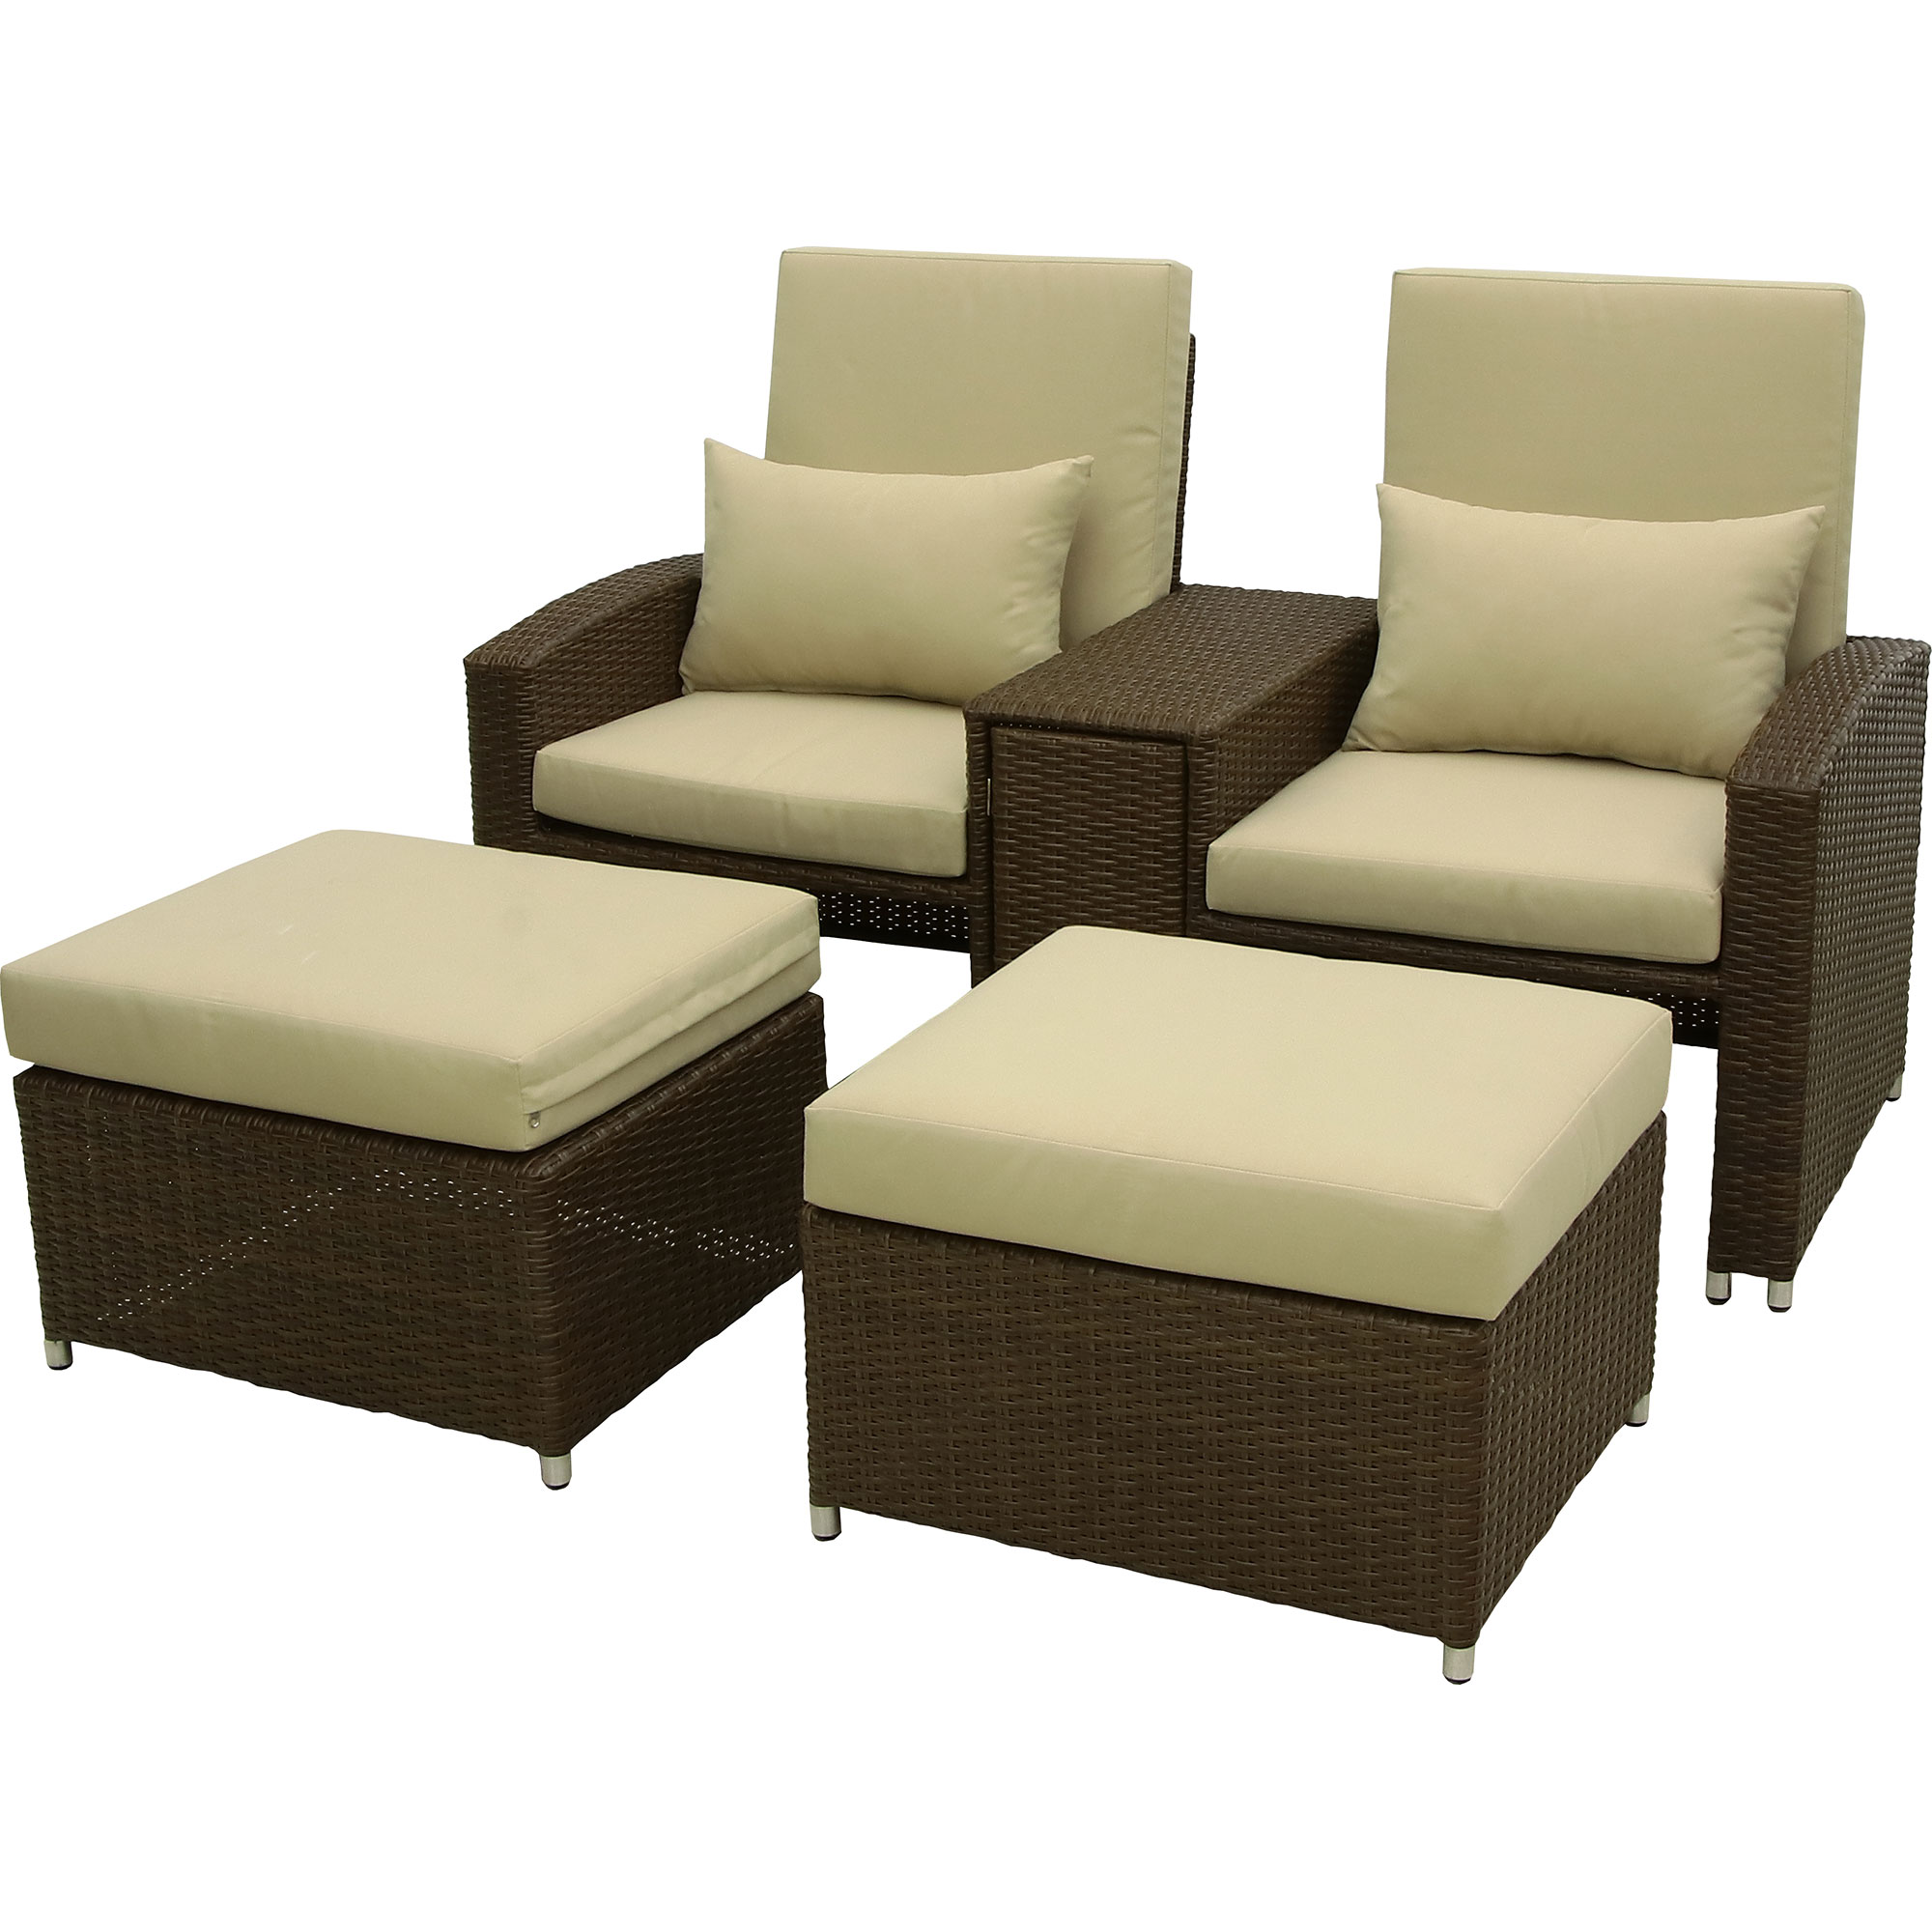 Комплект мебели Ronica Deli коричневый 4 предмета, цвет светло-коричневый, размер 74х164х100 - фото 1